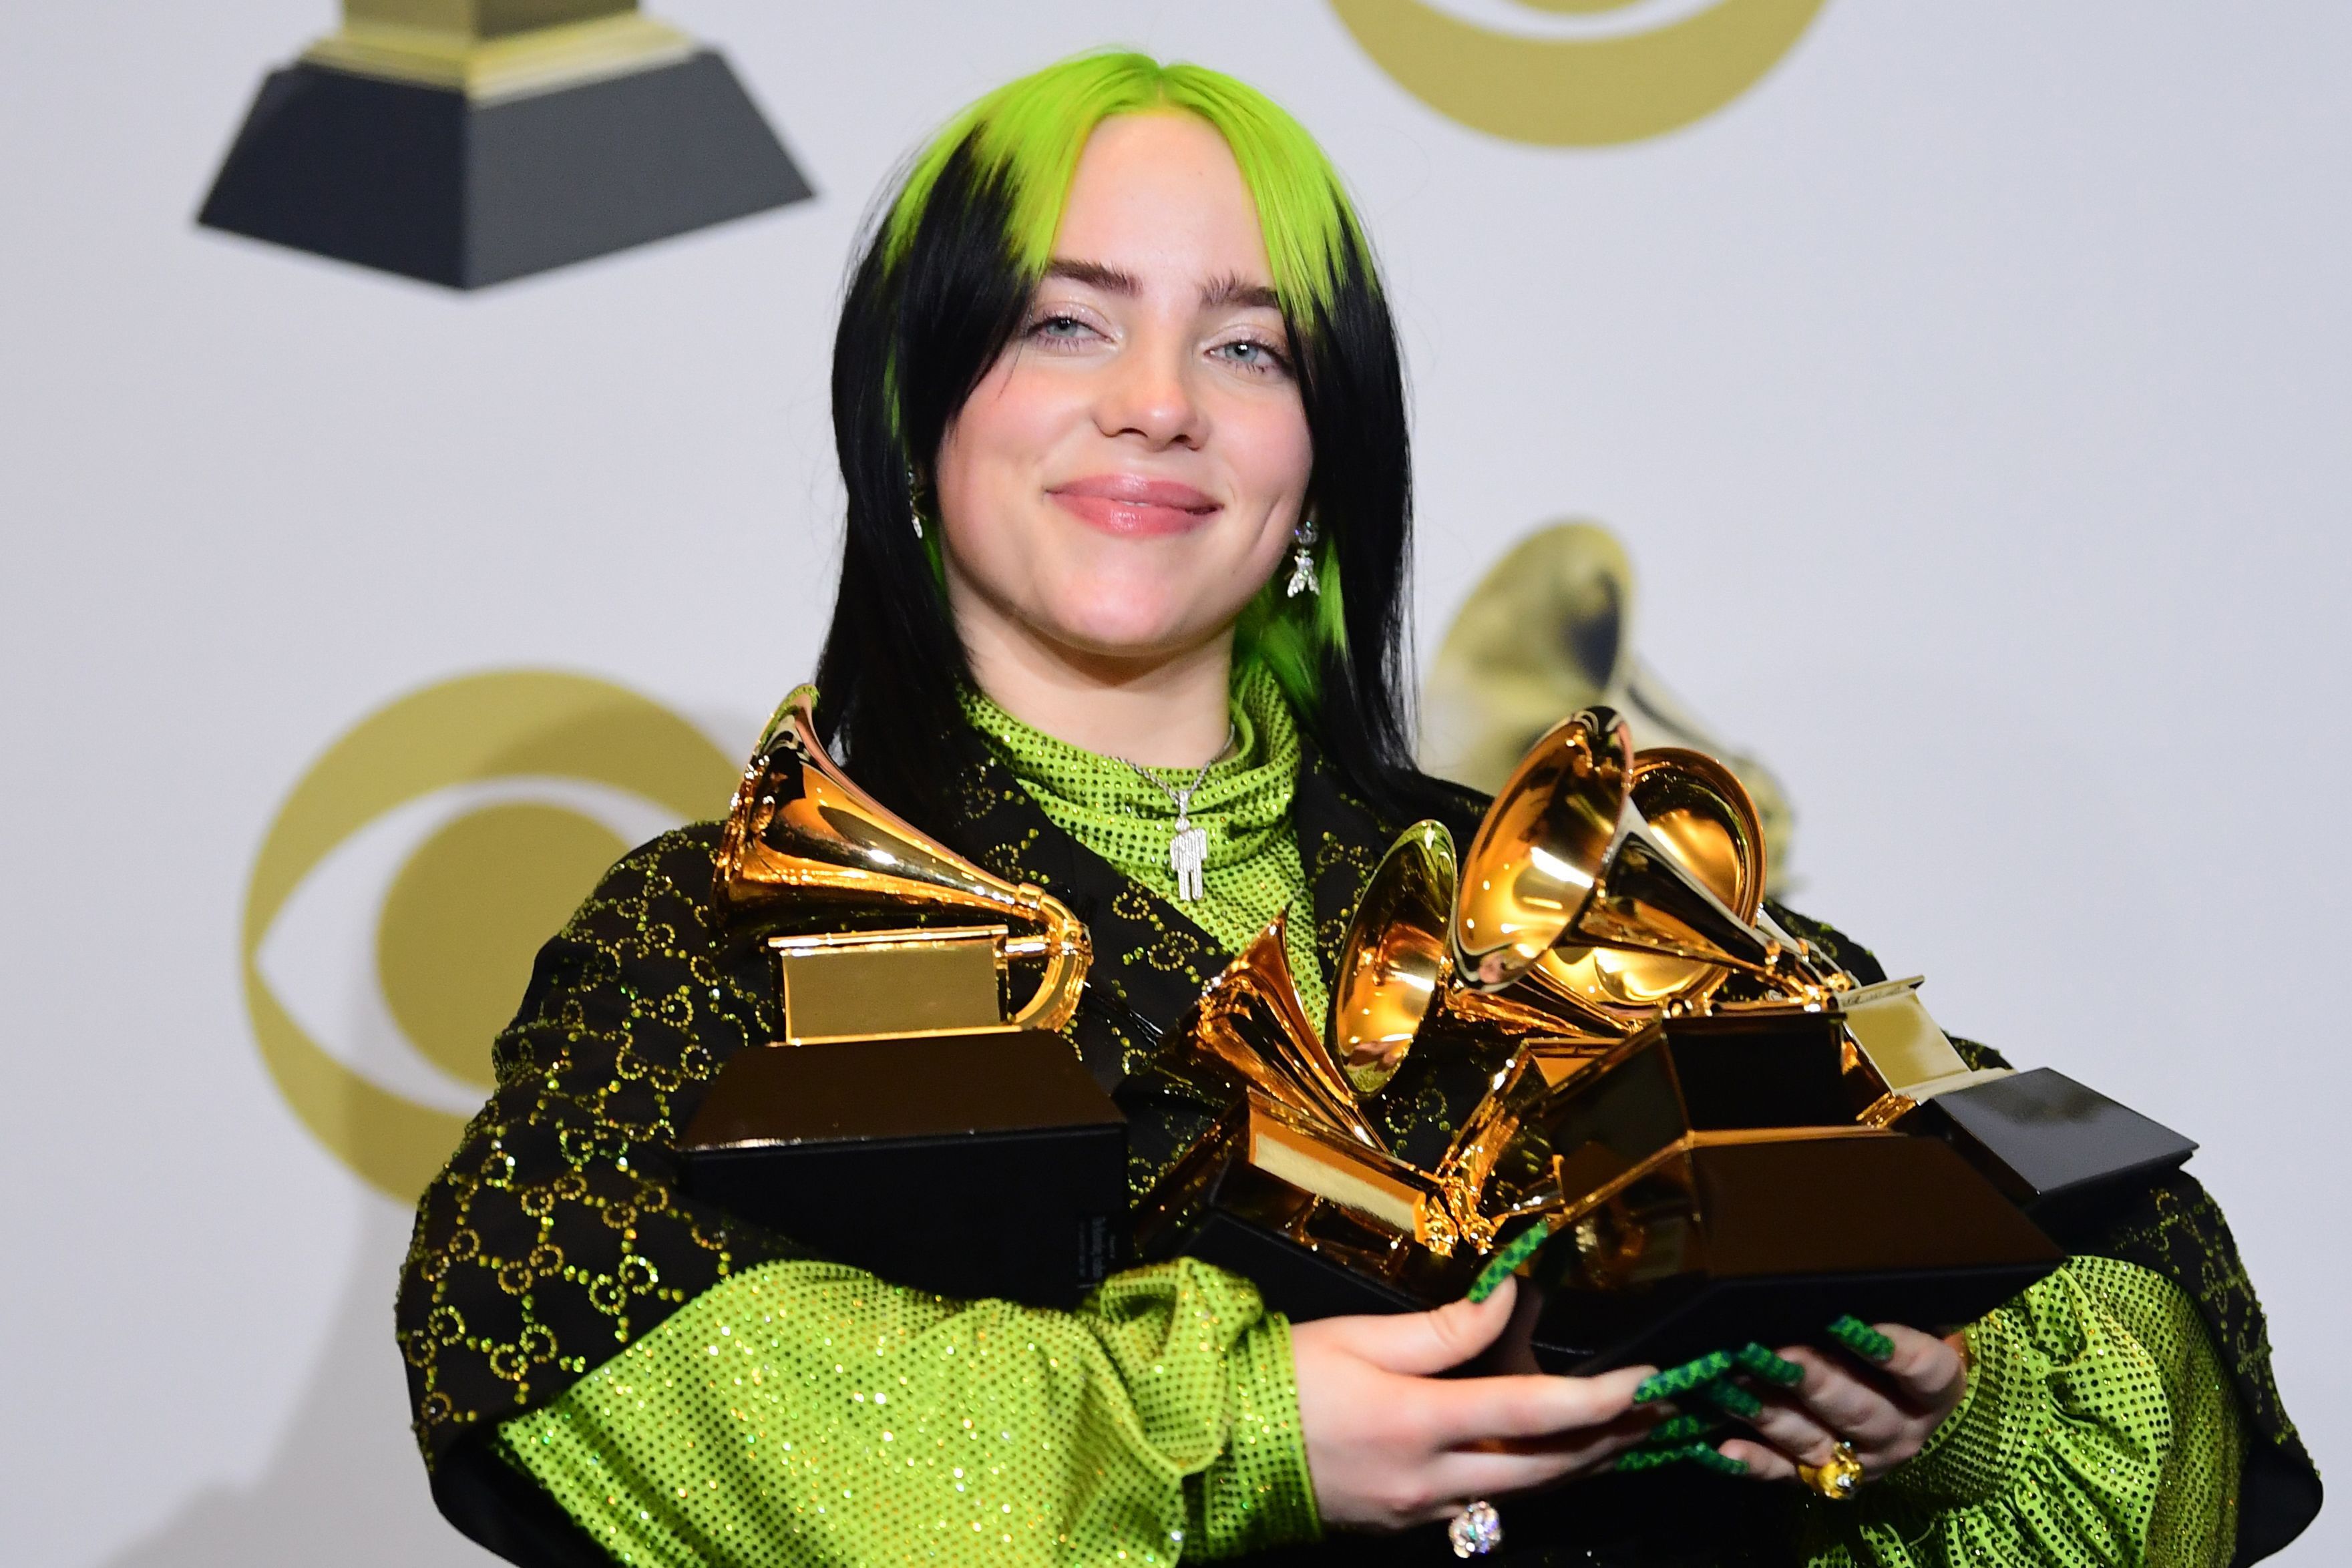 The Exact Concealer Billie Eilish Wore to the 2020 Grammys